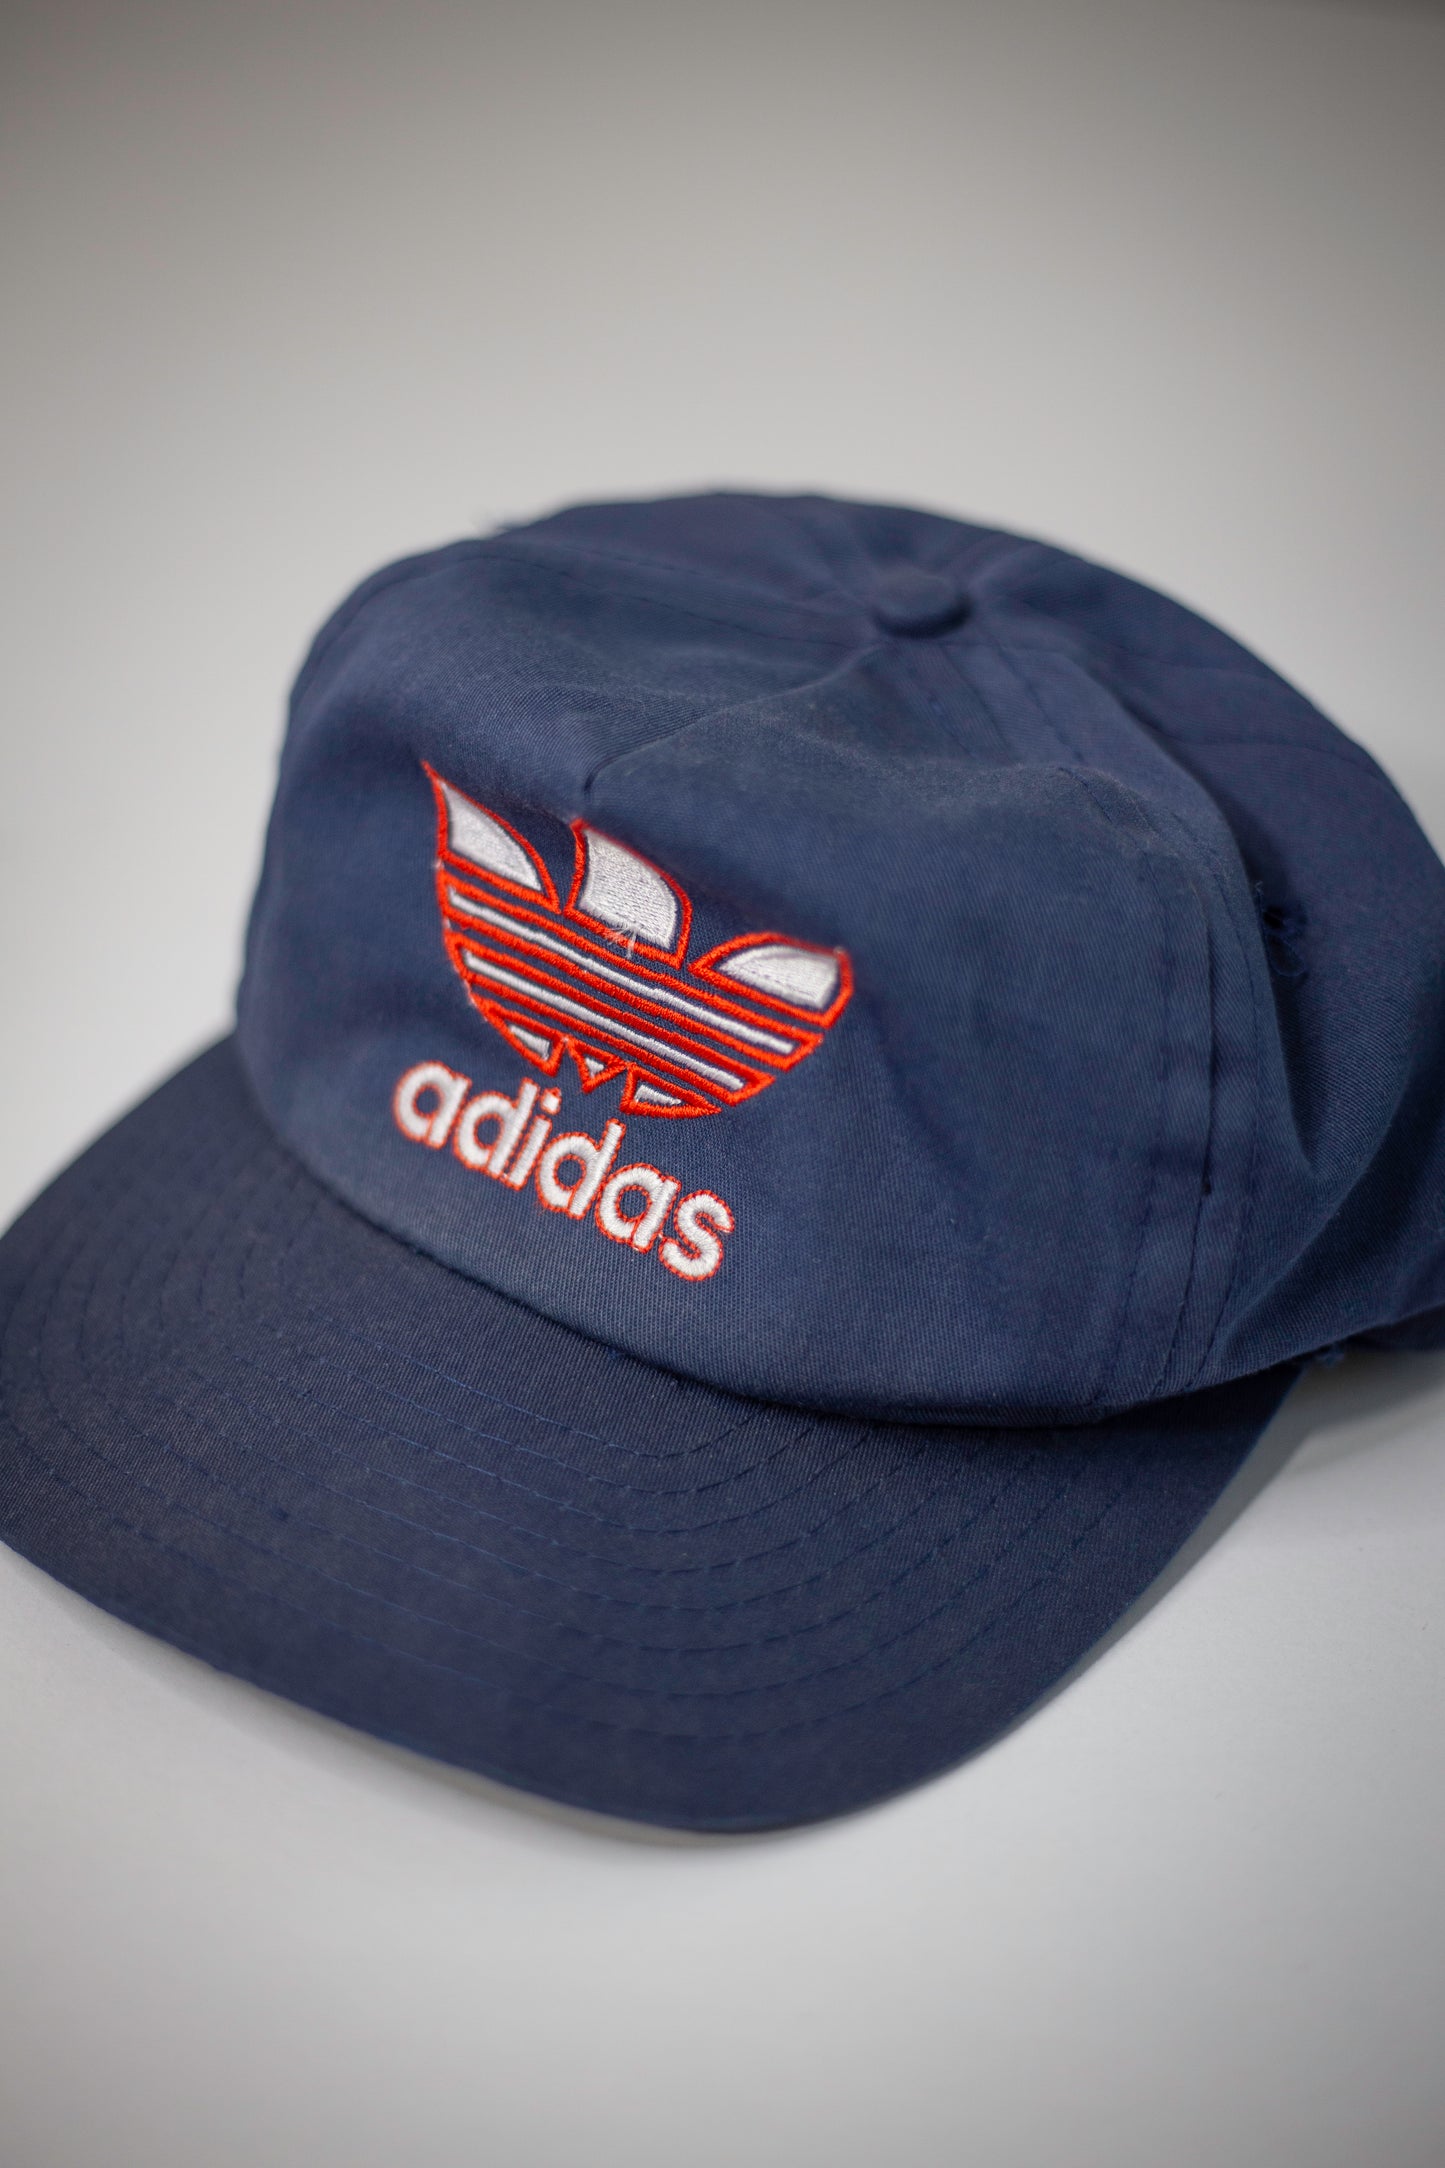 70's/80's Adidas Trefoil Snapback Hat